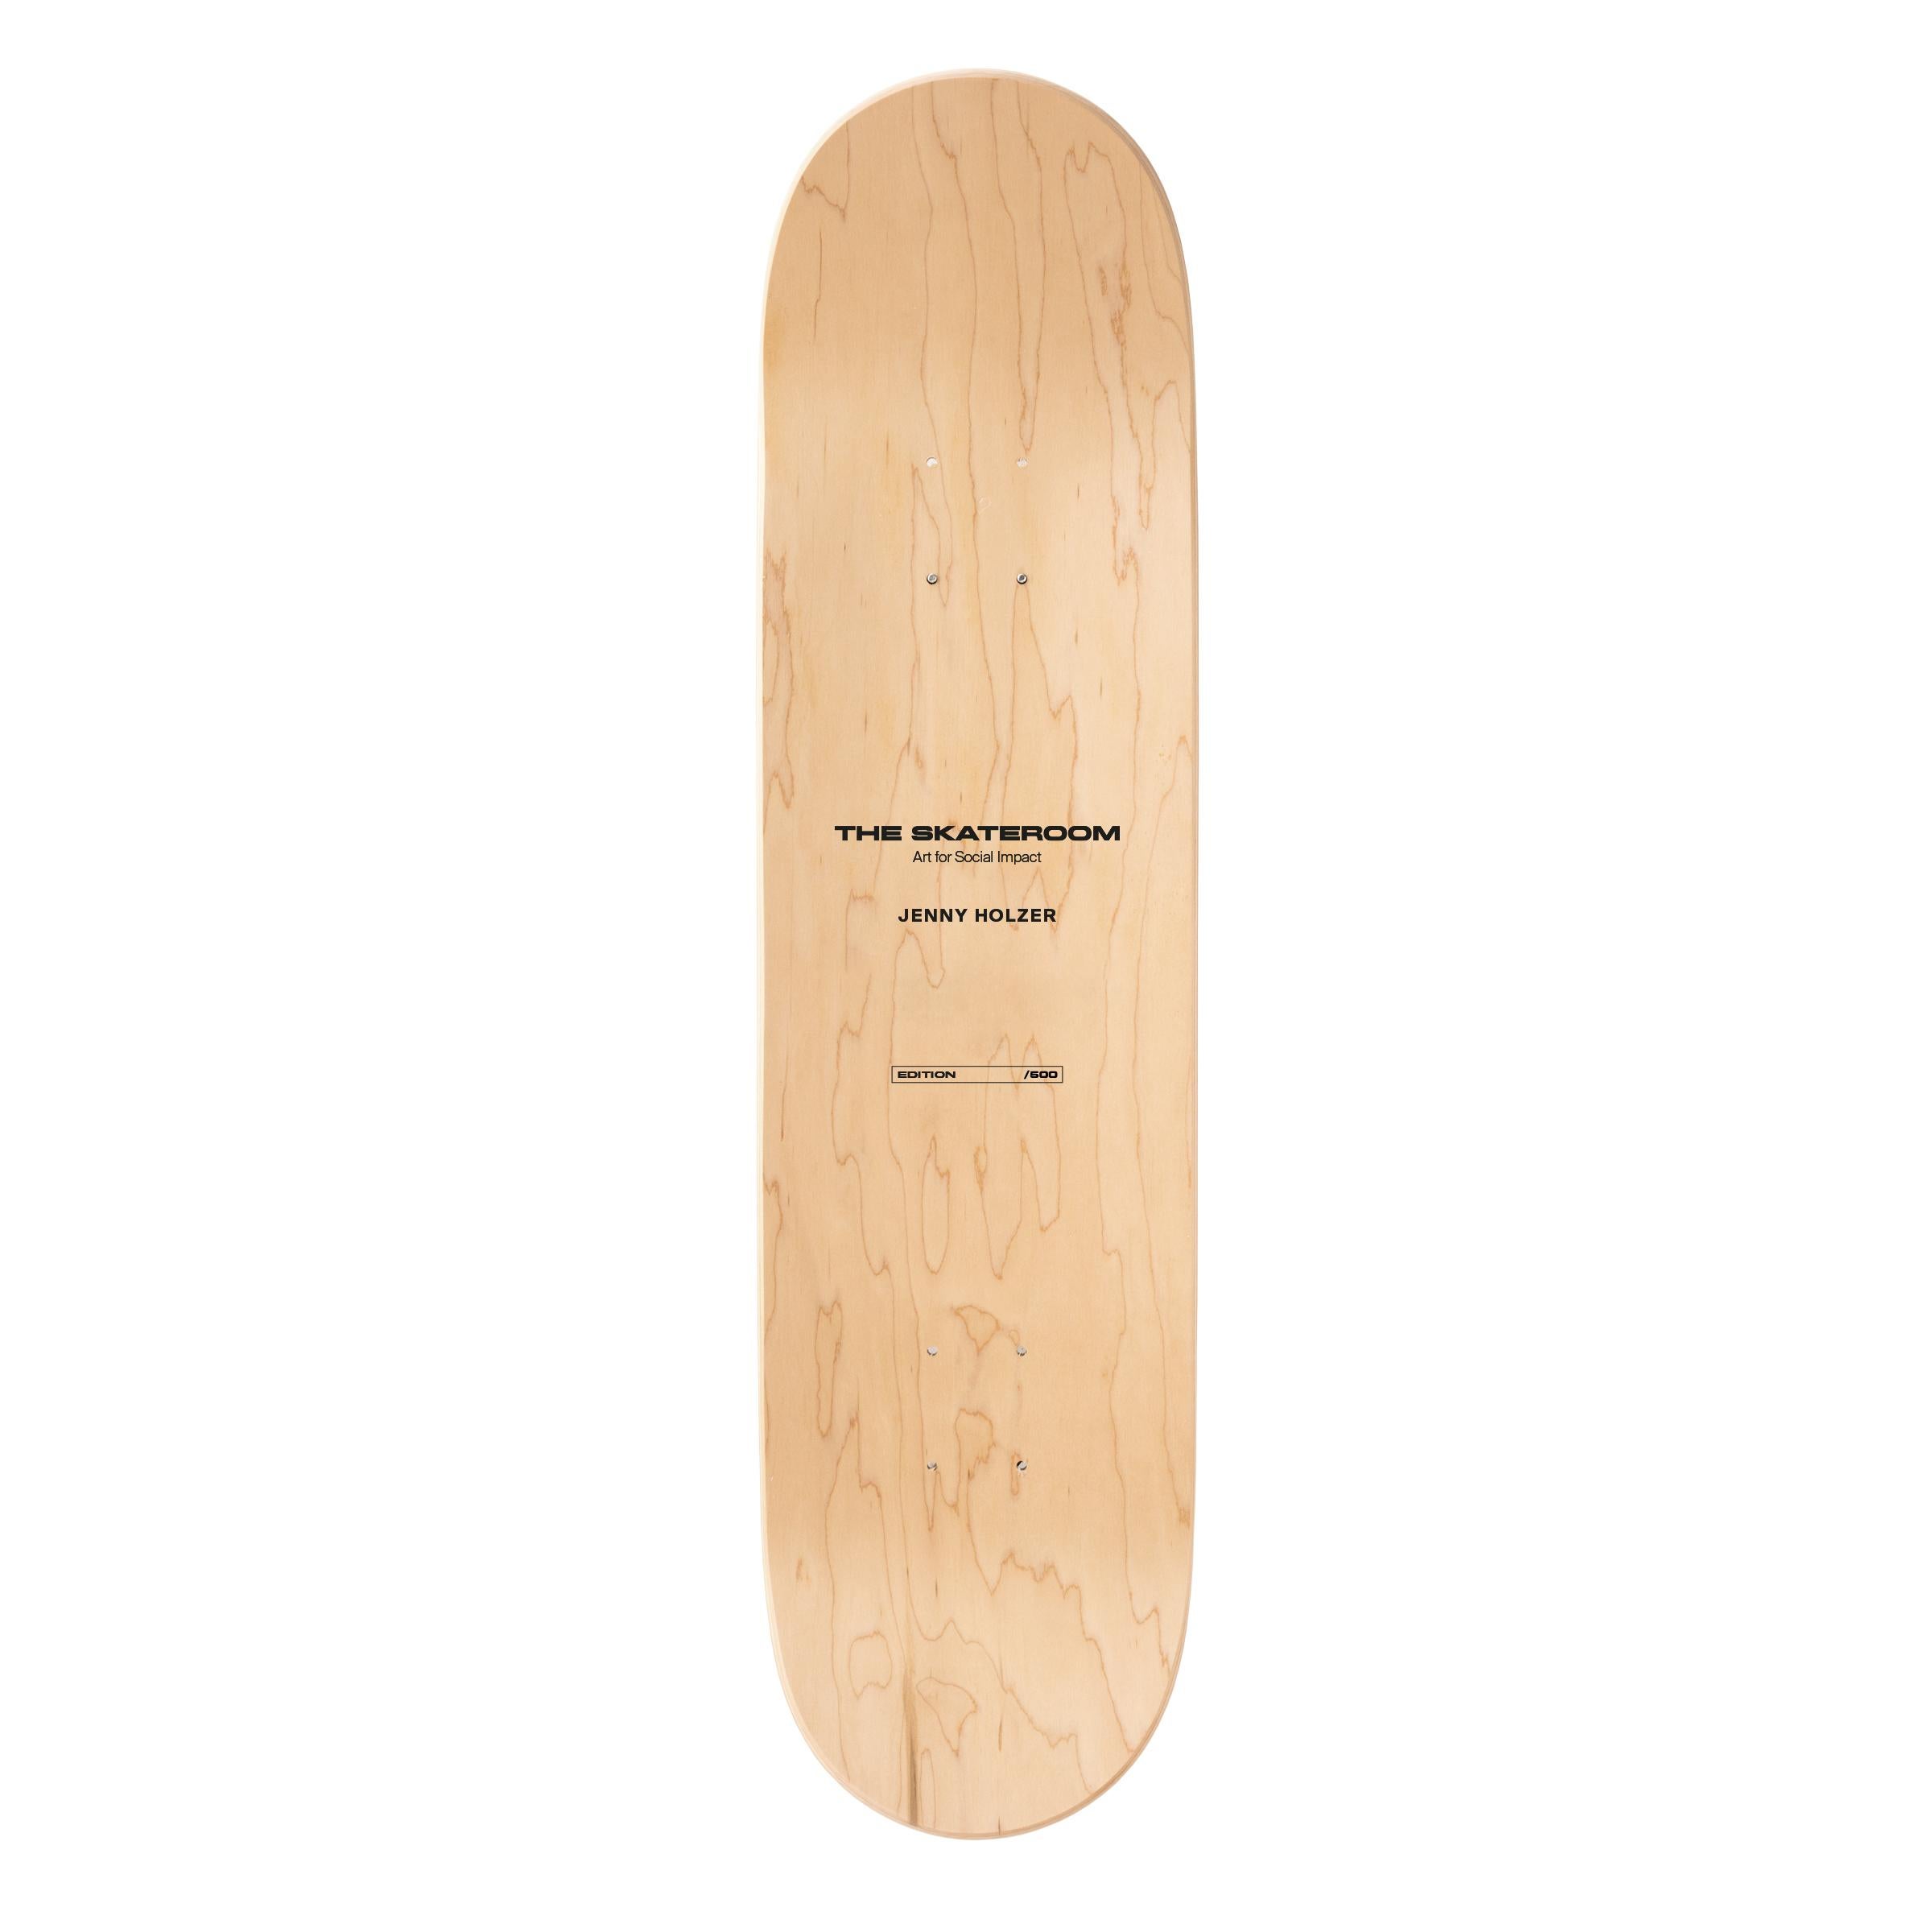 Belgian Impeach 'Wood' Skateboard Deck by Jenny Holzer